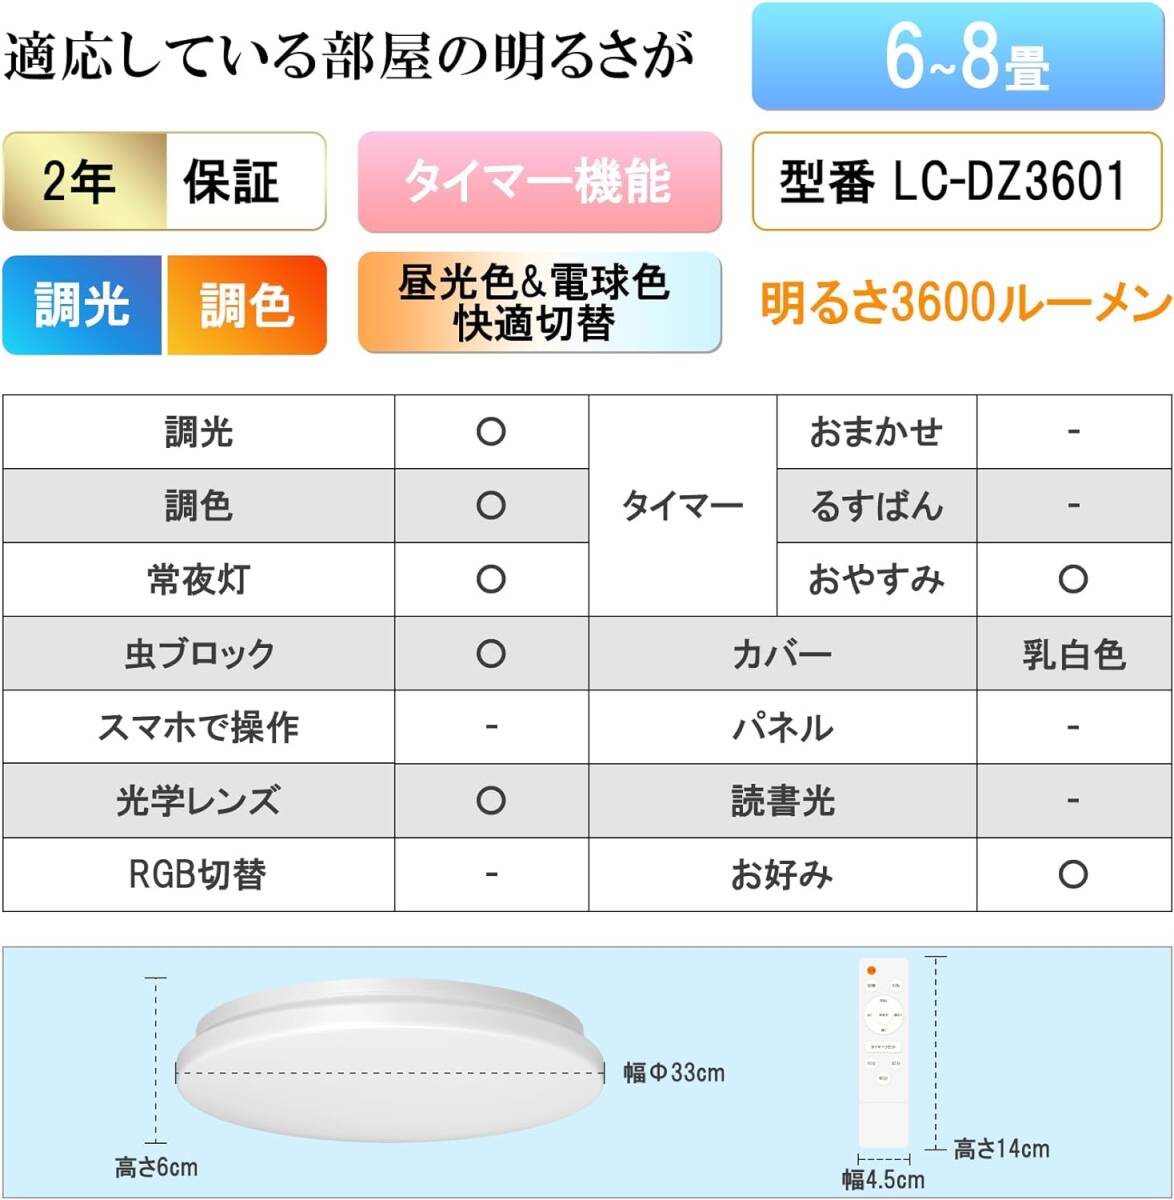 LEDシーリングライト 6~8畳(日本照明工業会基準) 36W 3600lm 調光調色照明器具 天井 LEDライト リモコン付き OFFタイマー メモリ機能_画像4